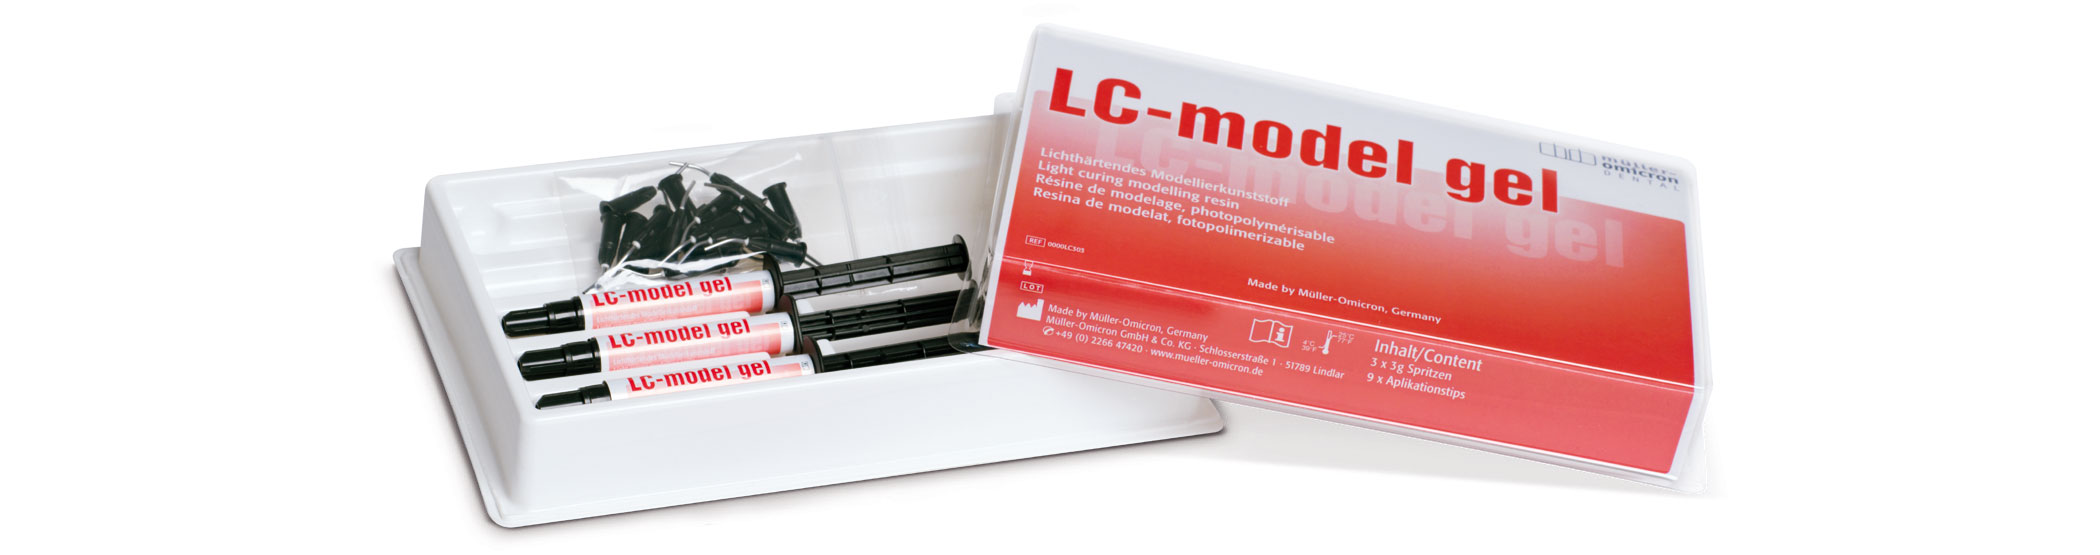 LC-model gel